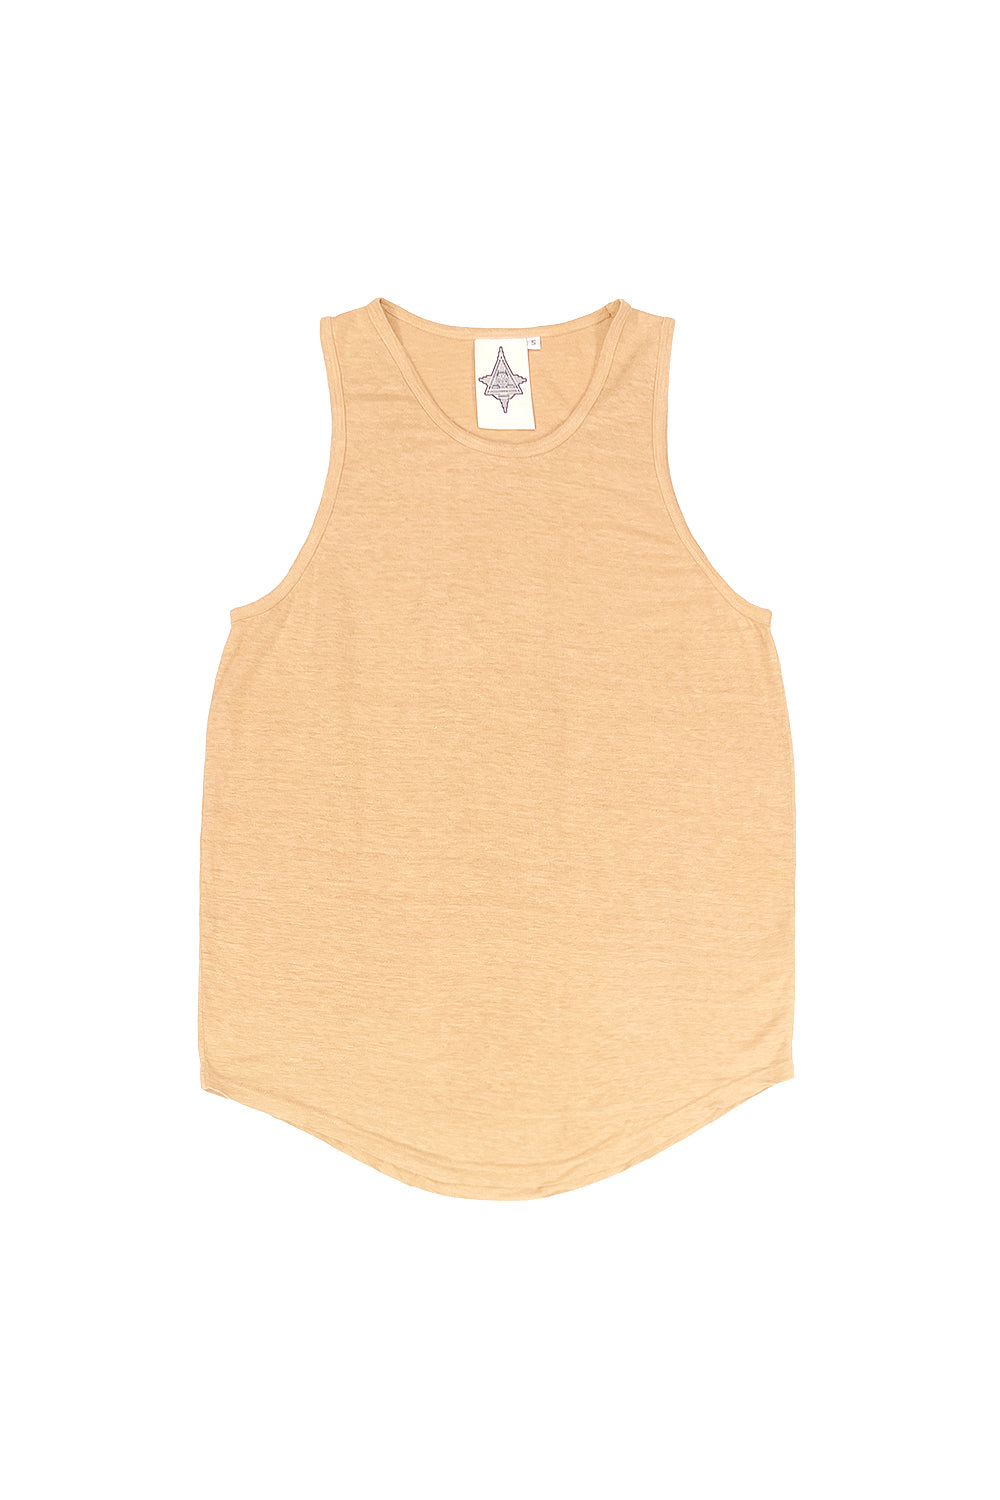 Playa 100% Tank Top | Jungmaven Hemp Clothing & Accessories / Color: Oat Milk